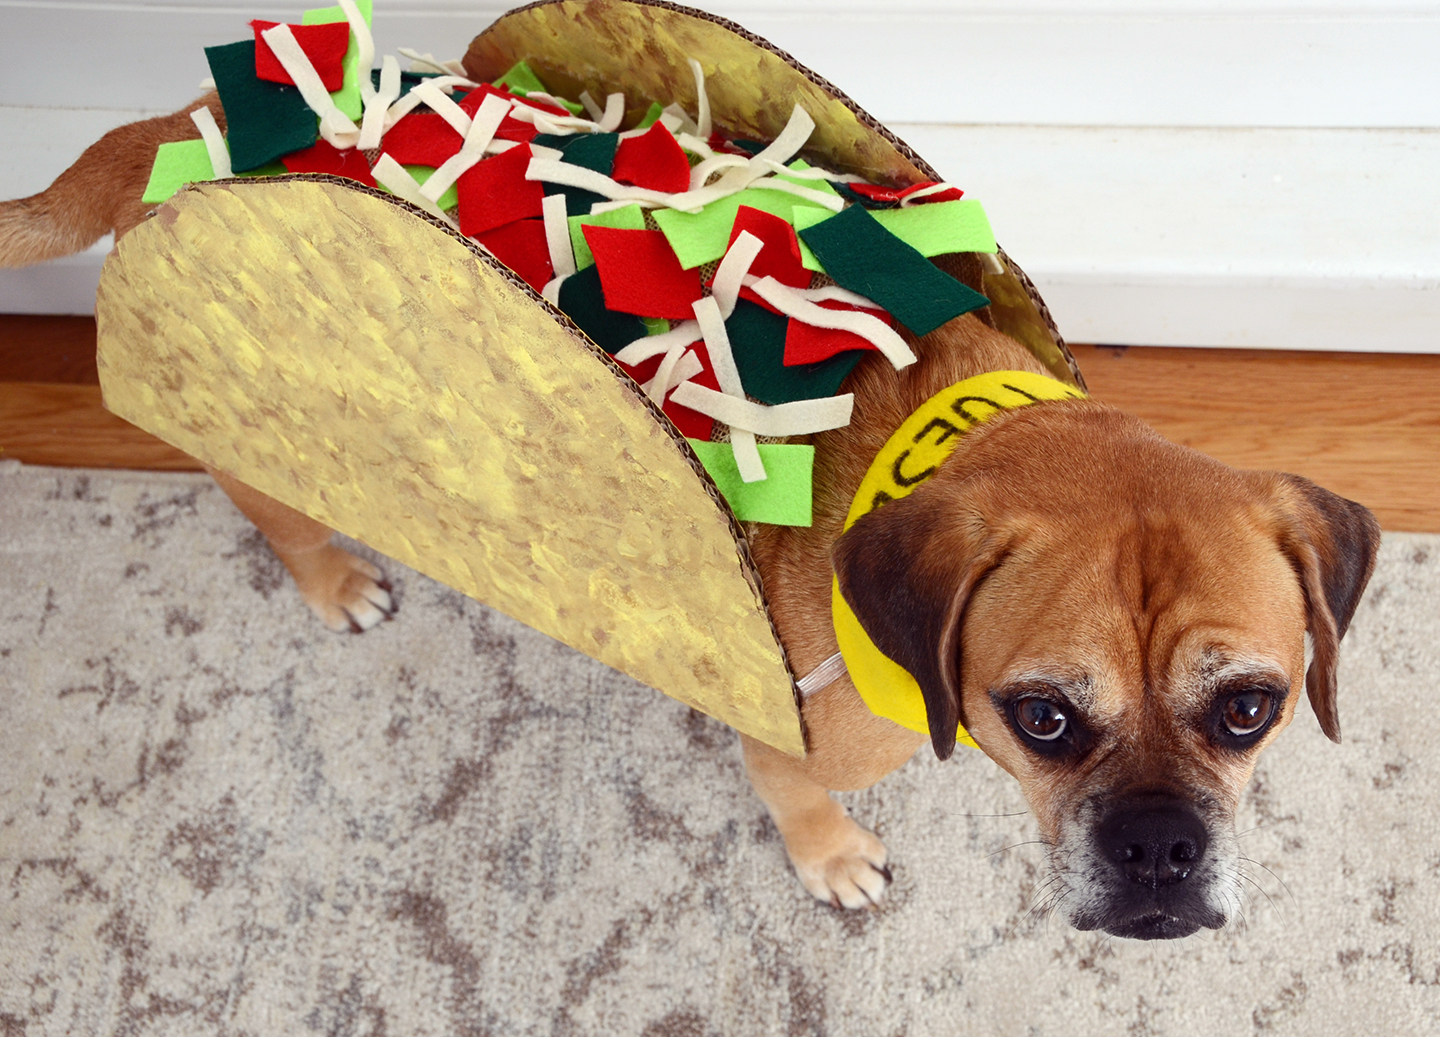 Halloween DIY: Make a Taco Tuesday Dog Costume